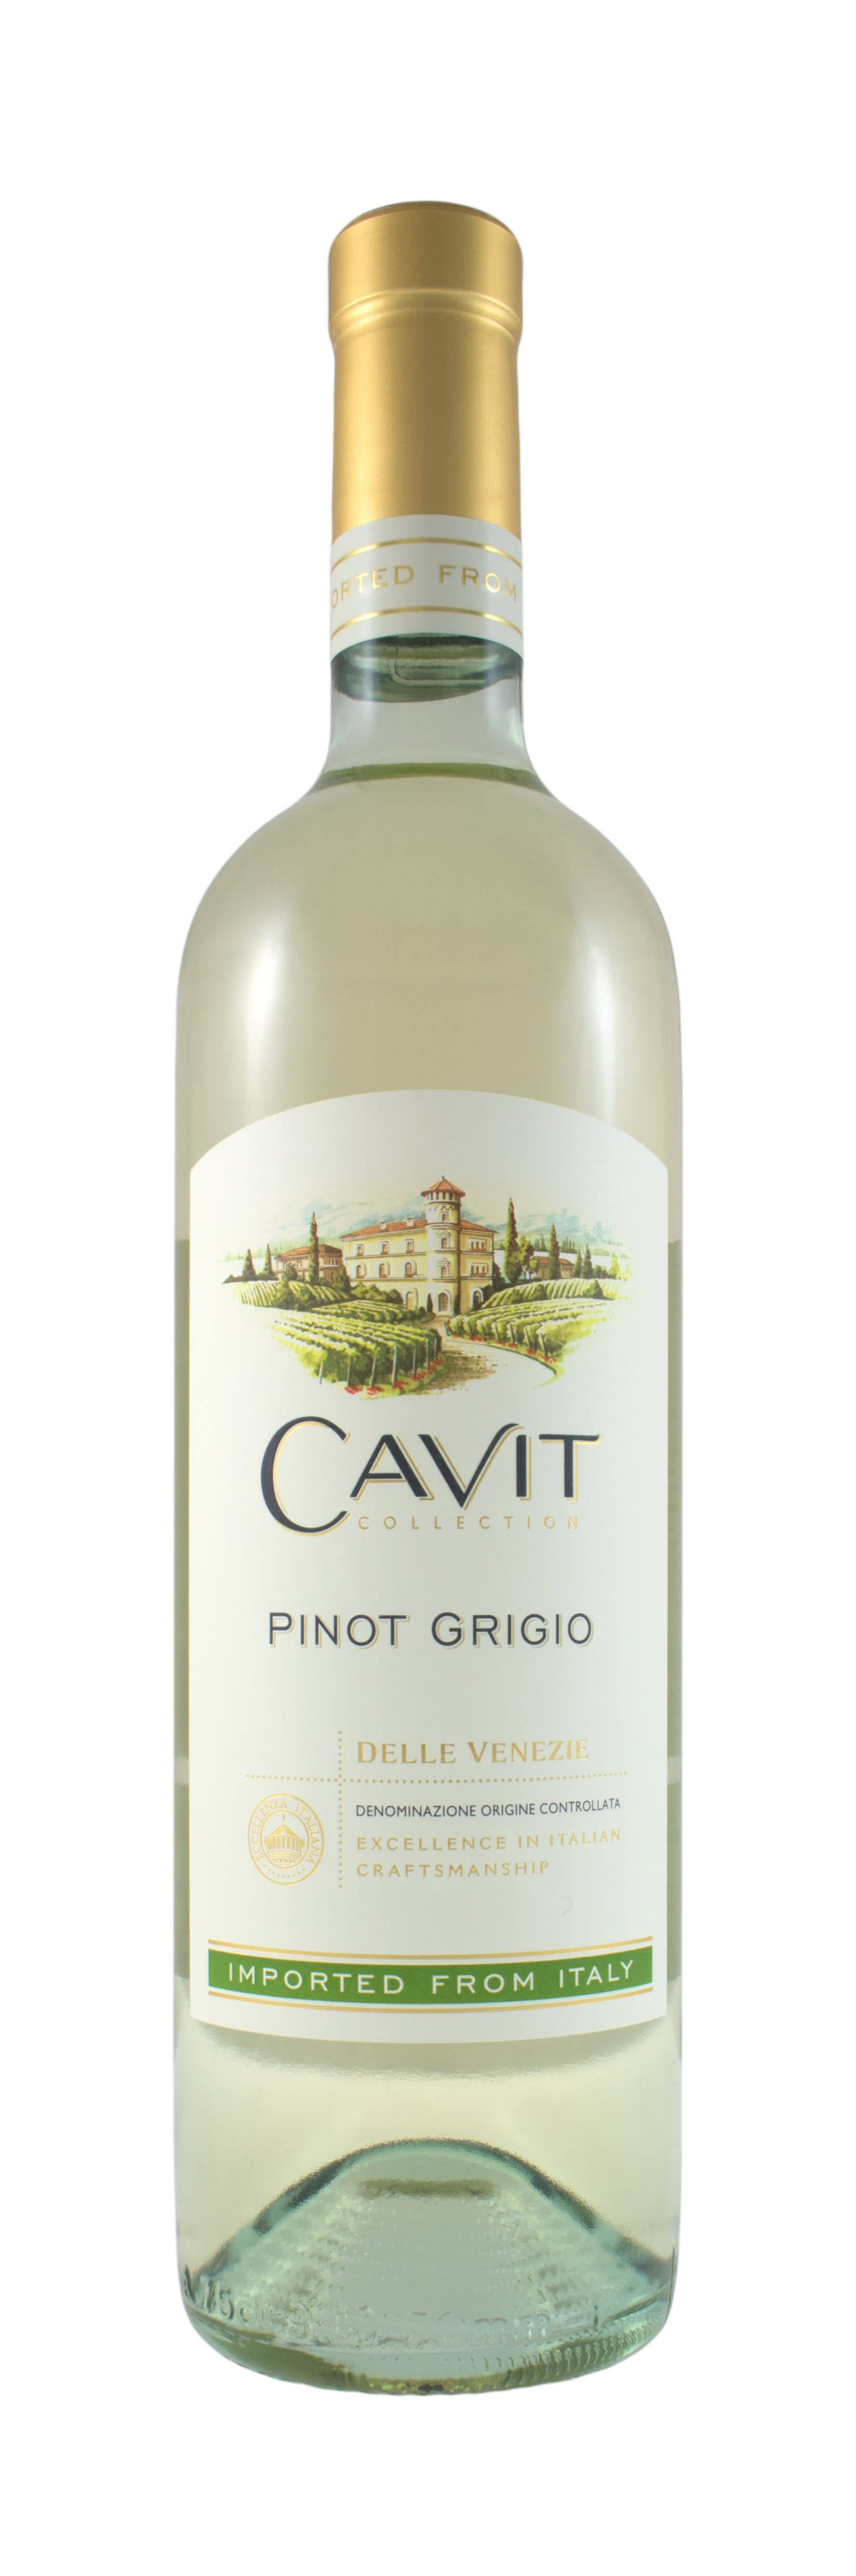 Cavit Collection Pinot Grigio - Italy